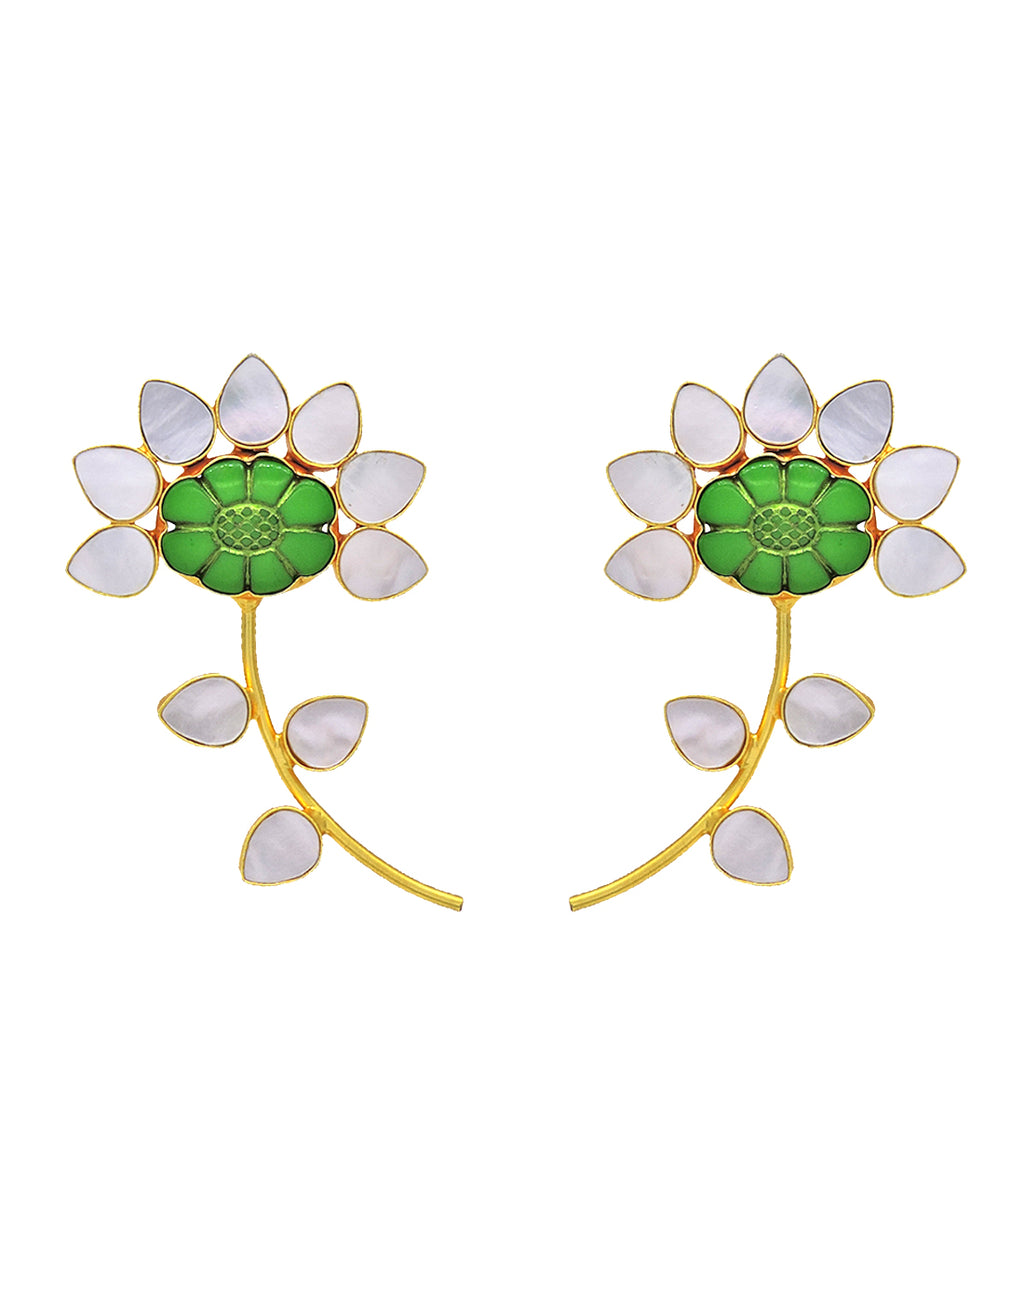 Flower Stem Earrings - Statement Earrings - Gold-Plated & Hypoallergenic - Made in India - Dubai Jewellery - Dori